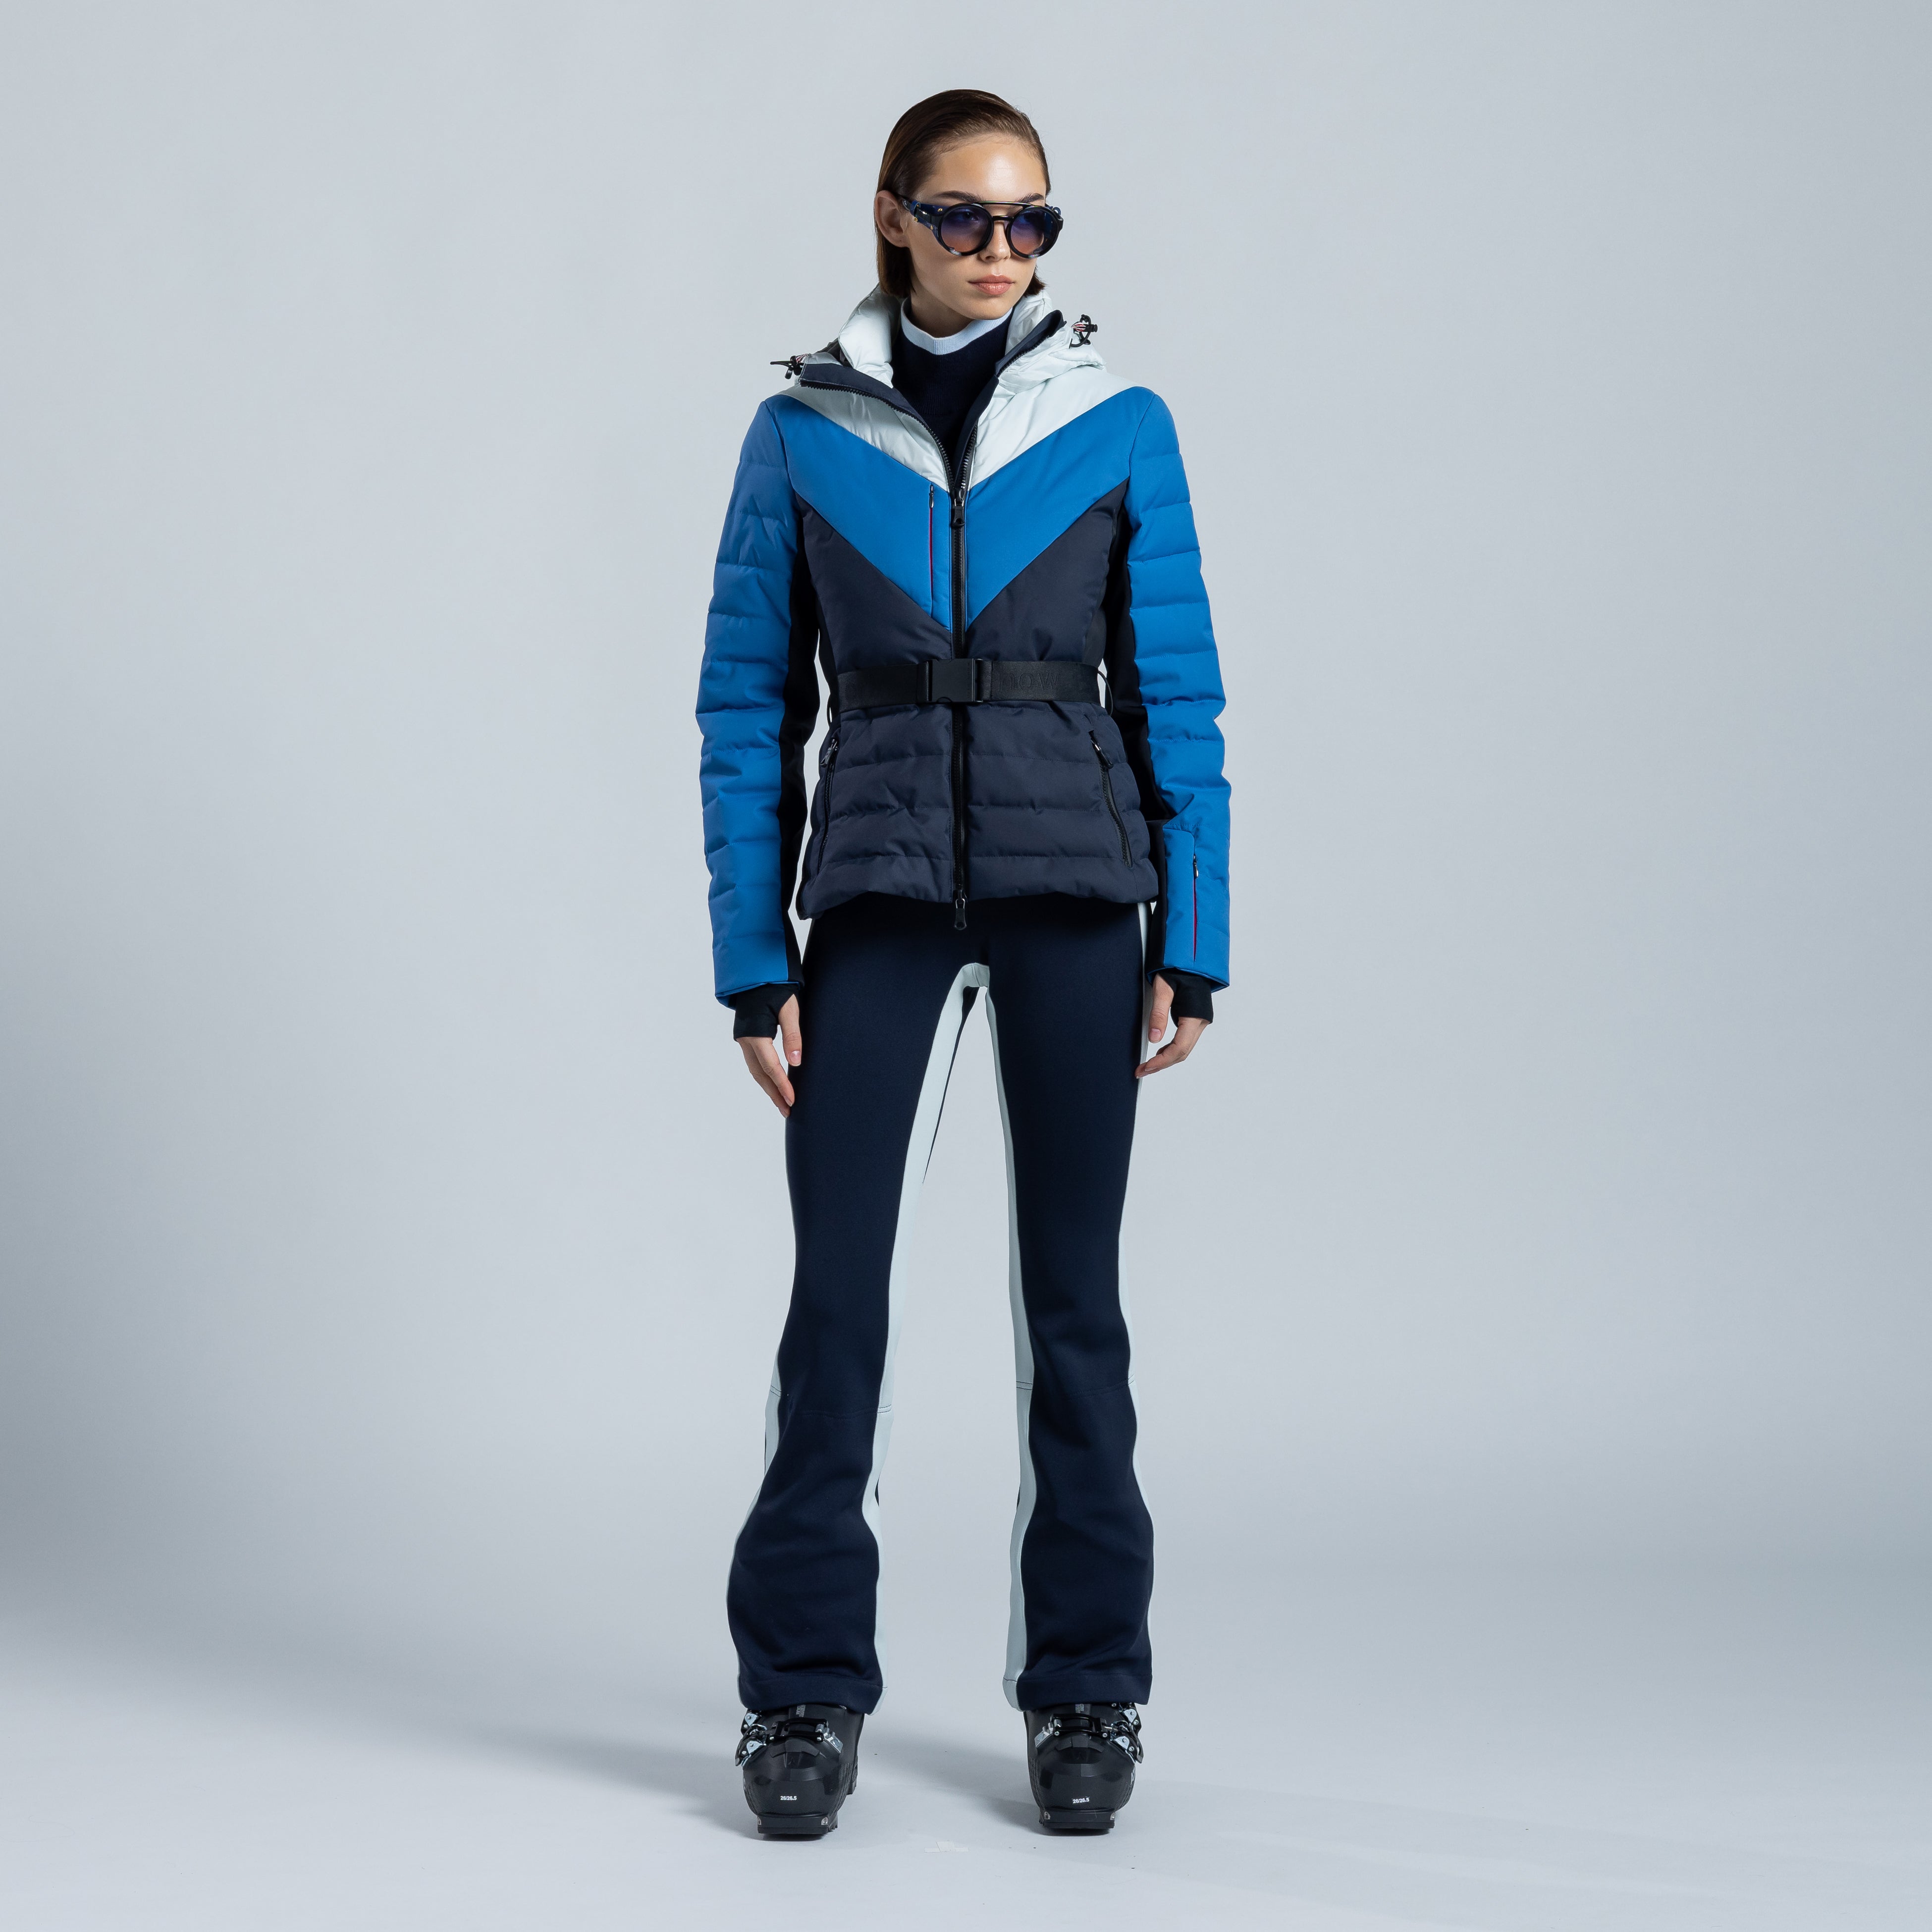 Women's Ski Wear & Clothes, Ski Jackets & Trousers